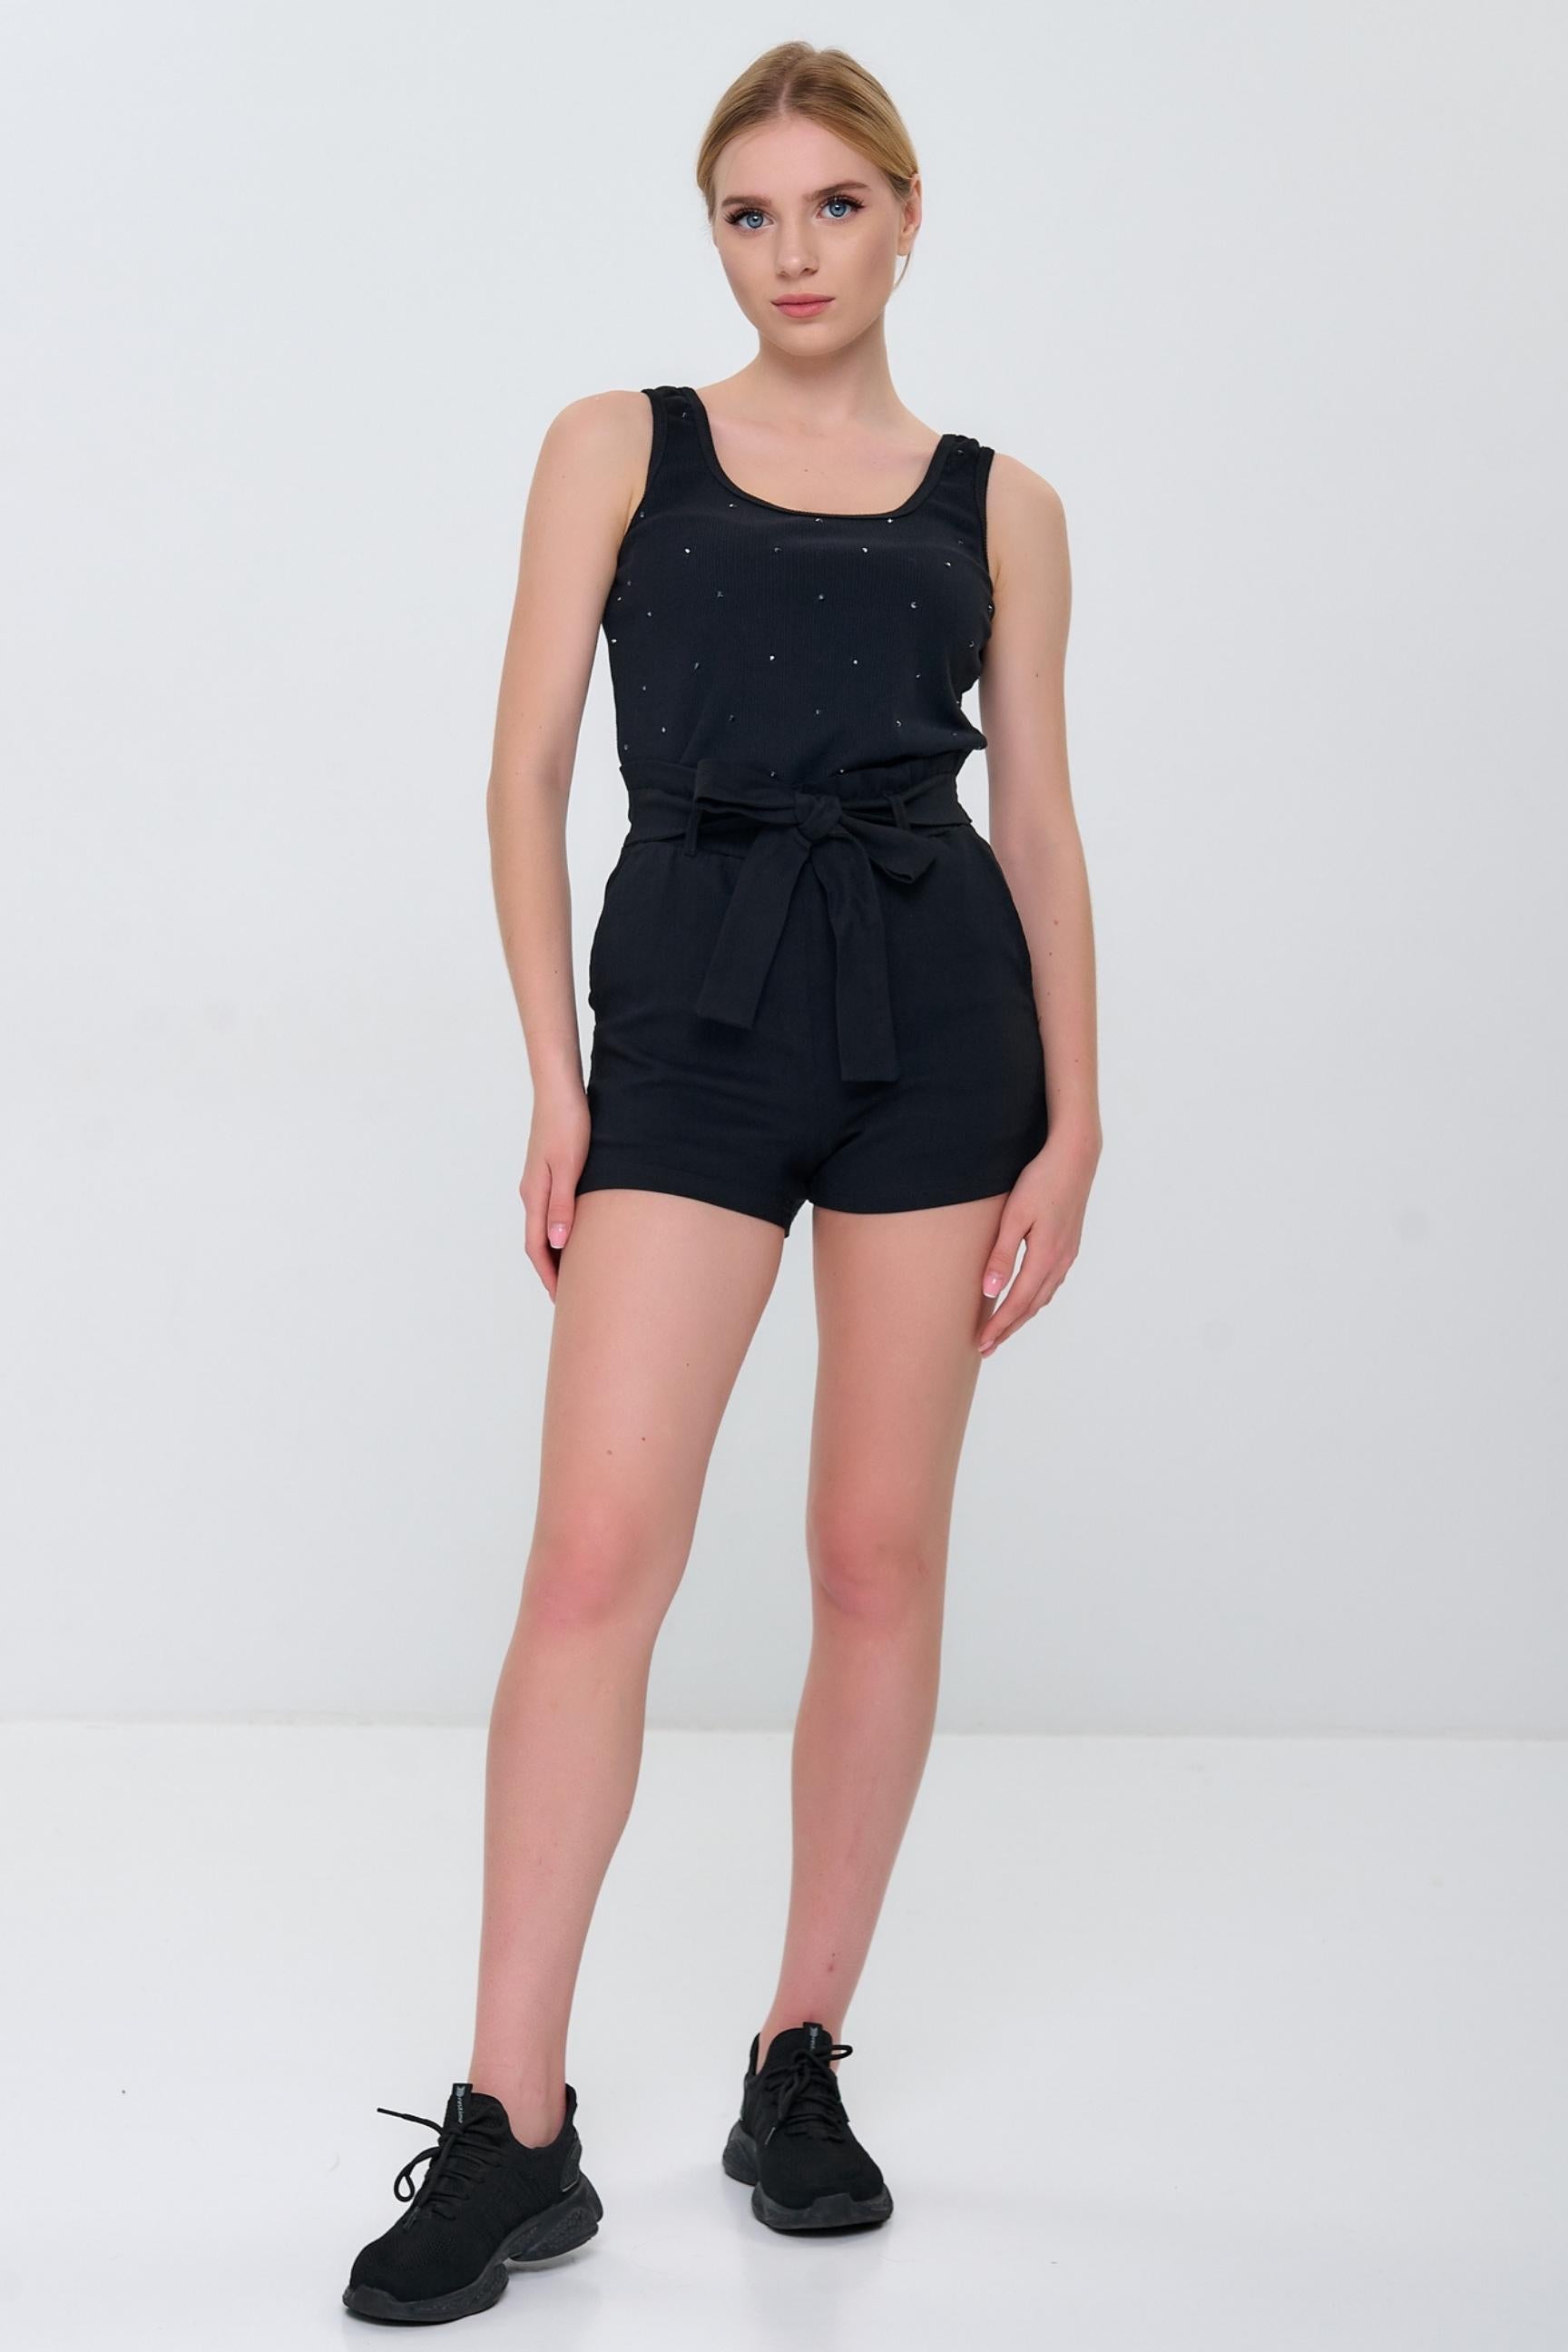 VOLGINA Couture Black Handmade Tank Top with Swarovski Rhinestones + Black Handmade Shorts Bundle